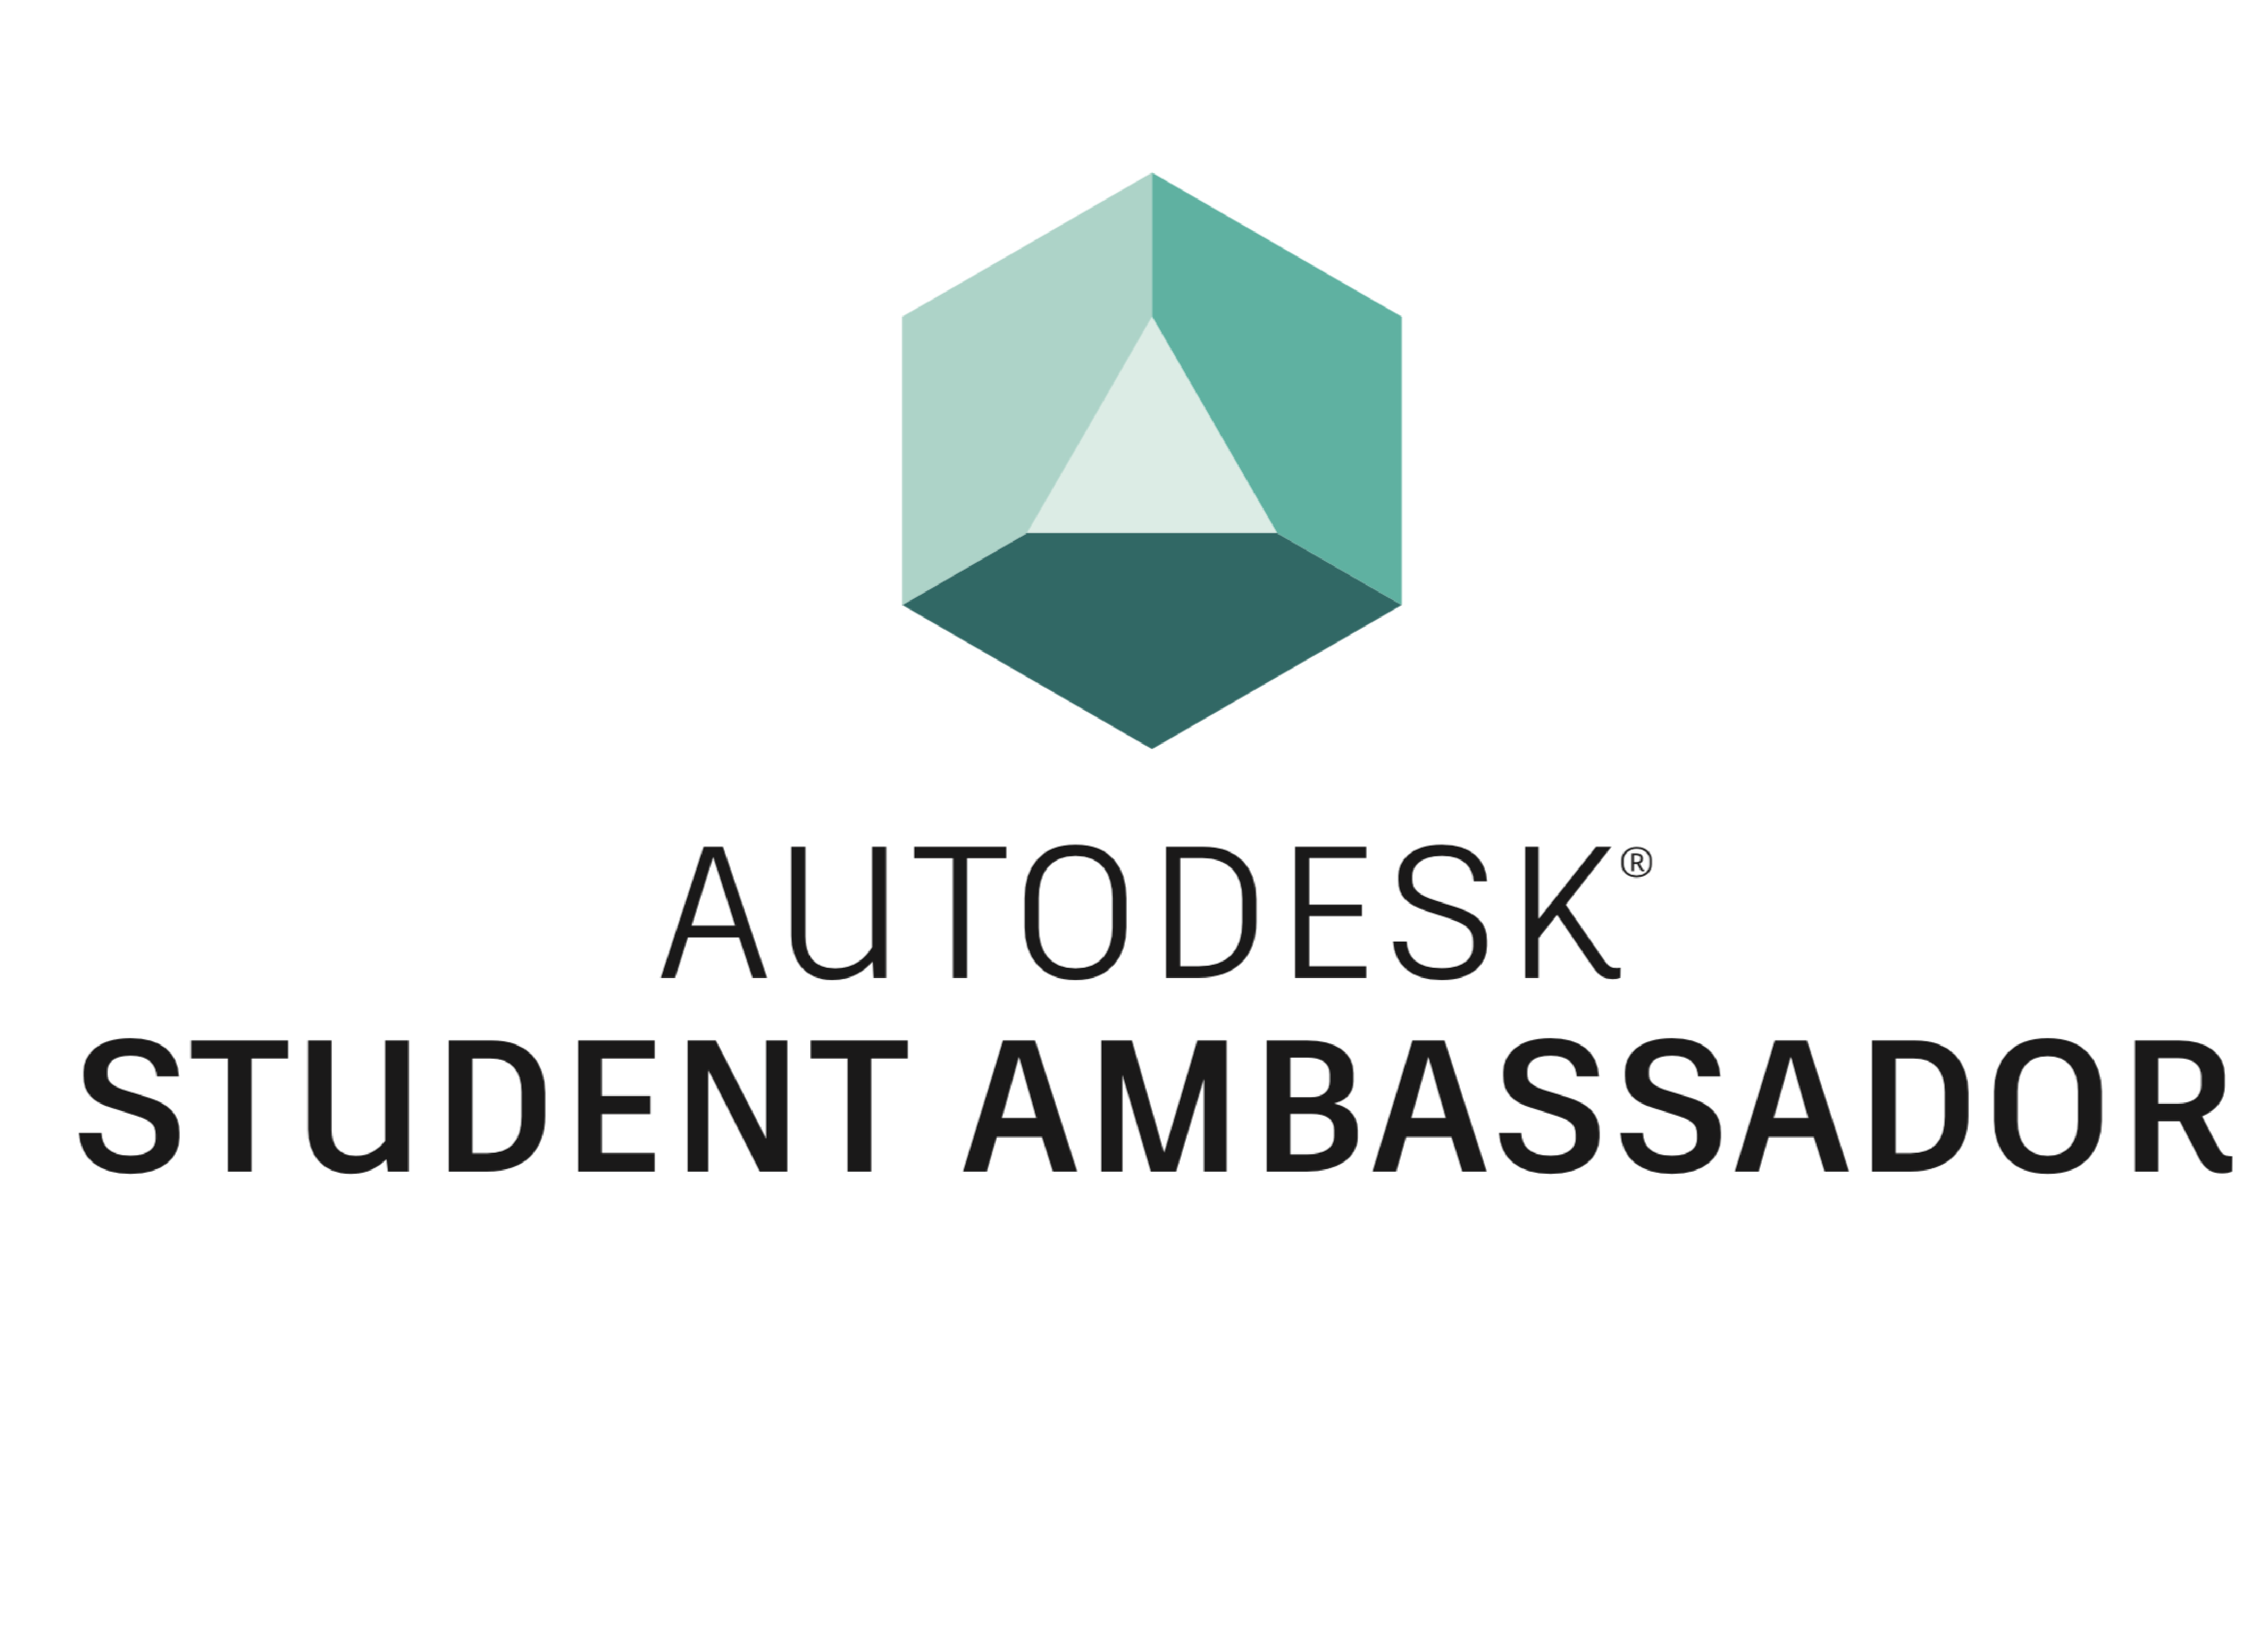 Autodesk Student Ambassador